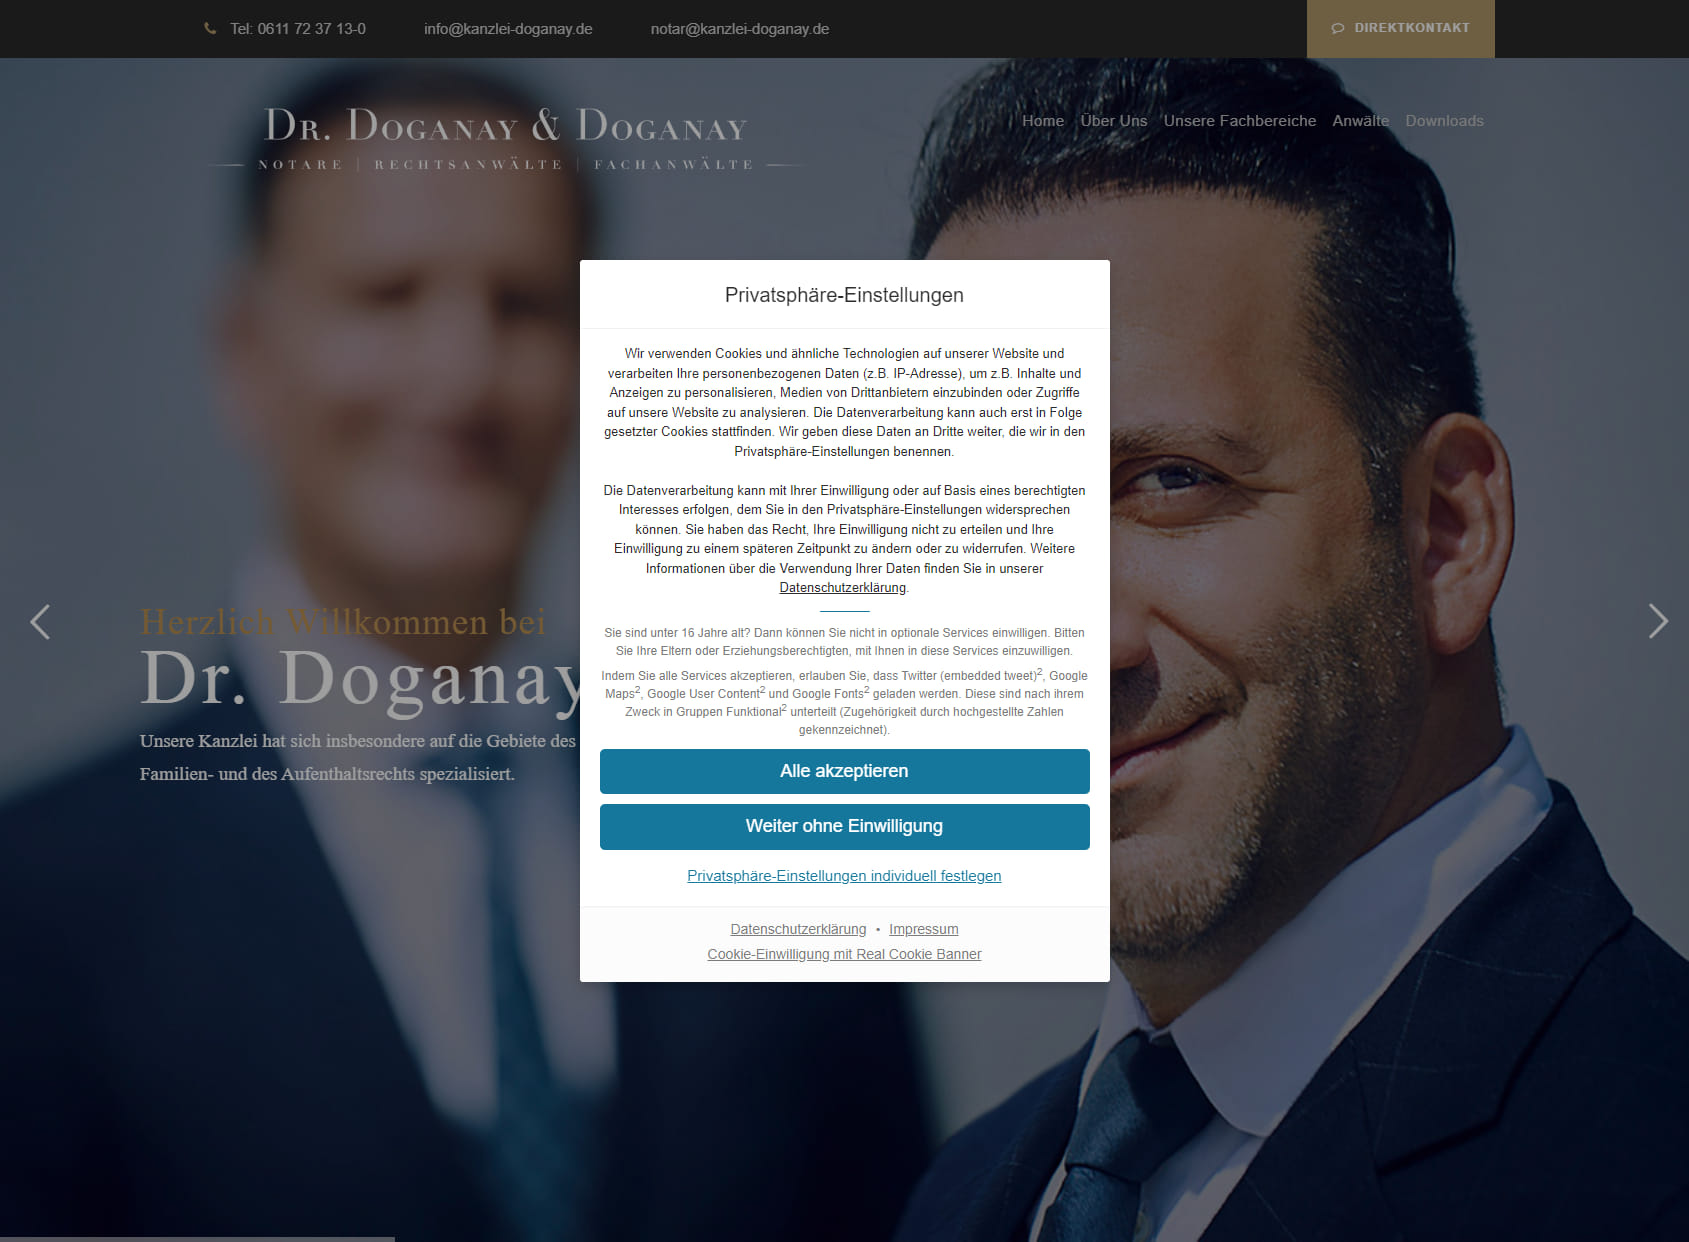 Dr. Doganay & Doganay, Notare - Rechtsanwälte - Fachanwälte